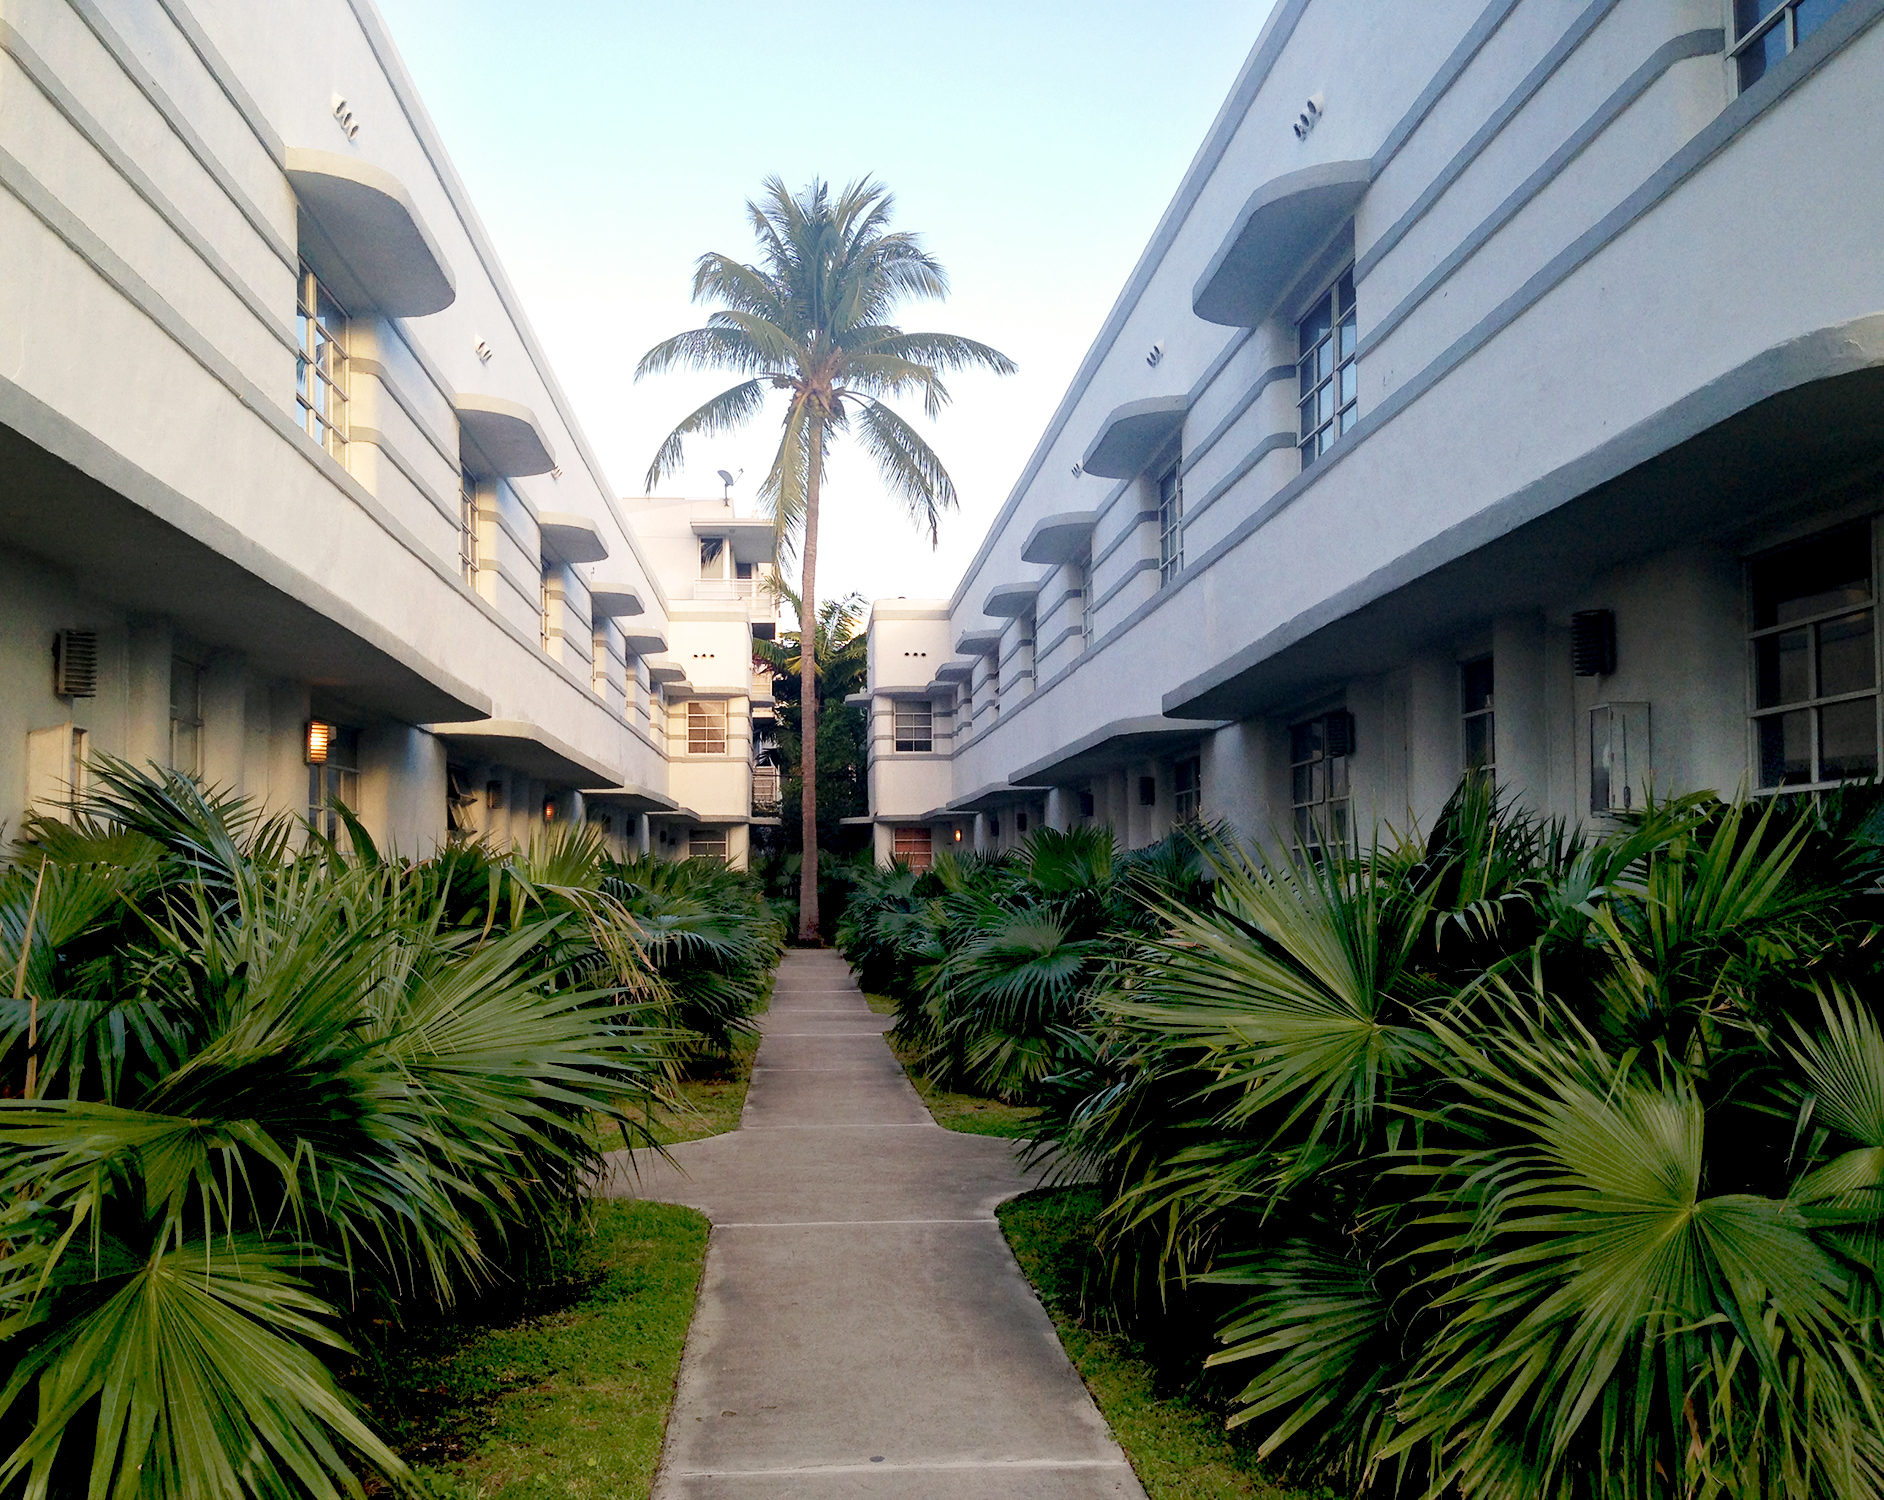 Art deco buildings in Miami, Florida / Darker than Green